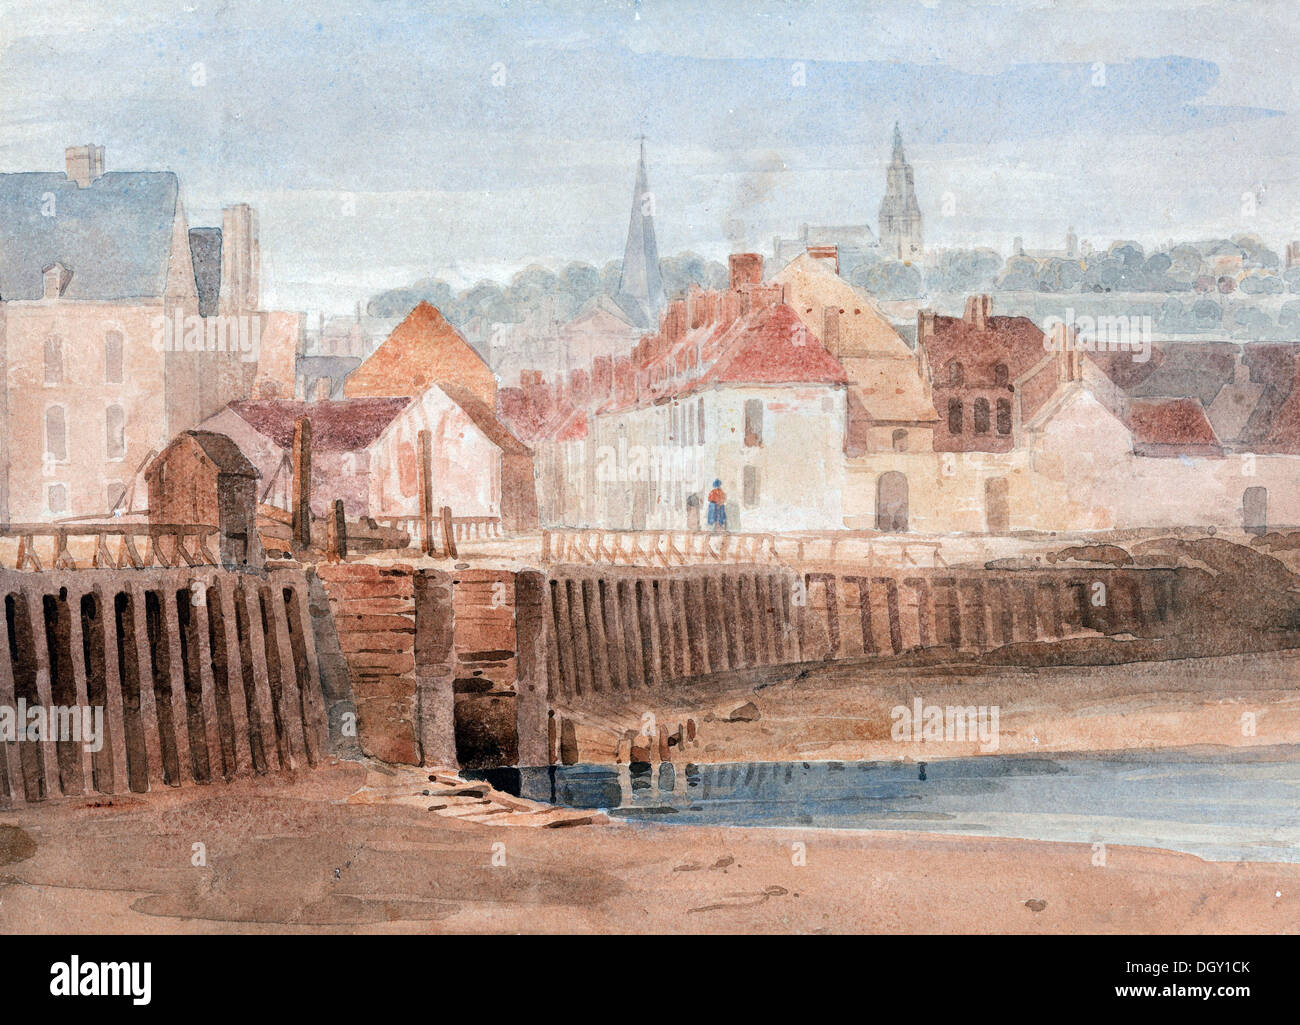 Richard Parkes Bonington, Boulogne Harbor 1823 Watercolor on paper. Yale Center for British Art, New Haven, USA. Stock Photo